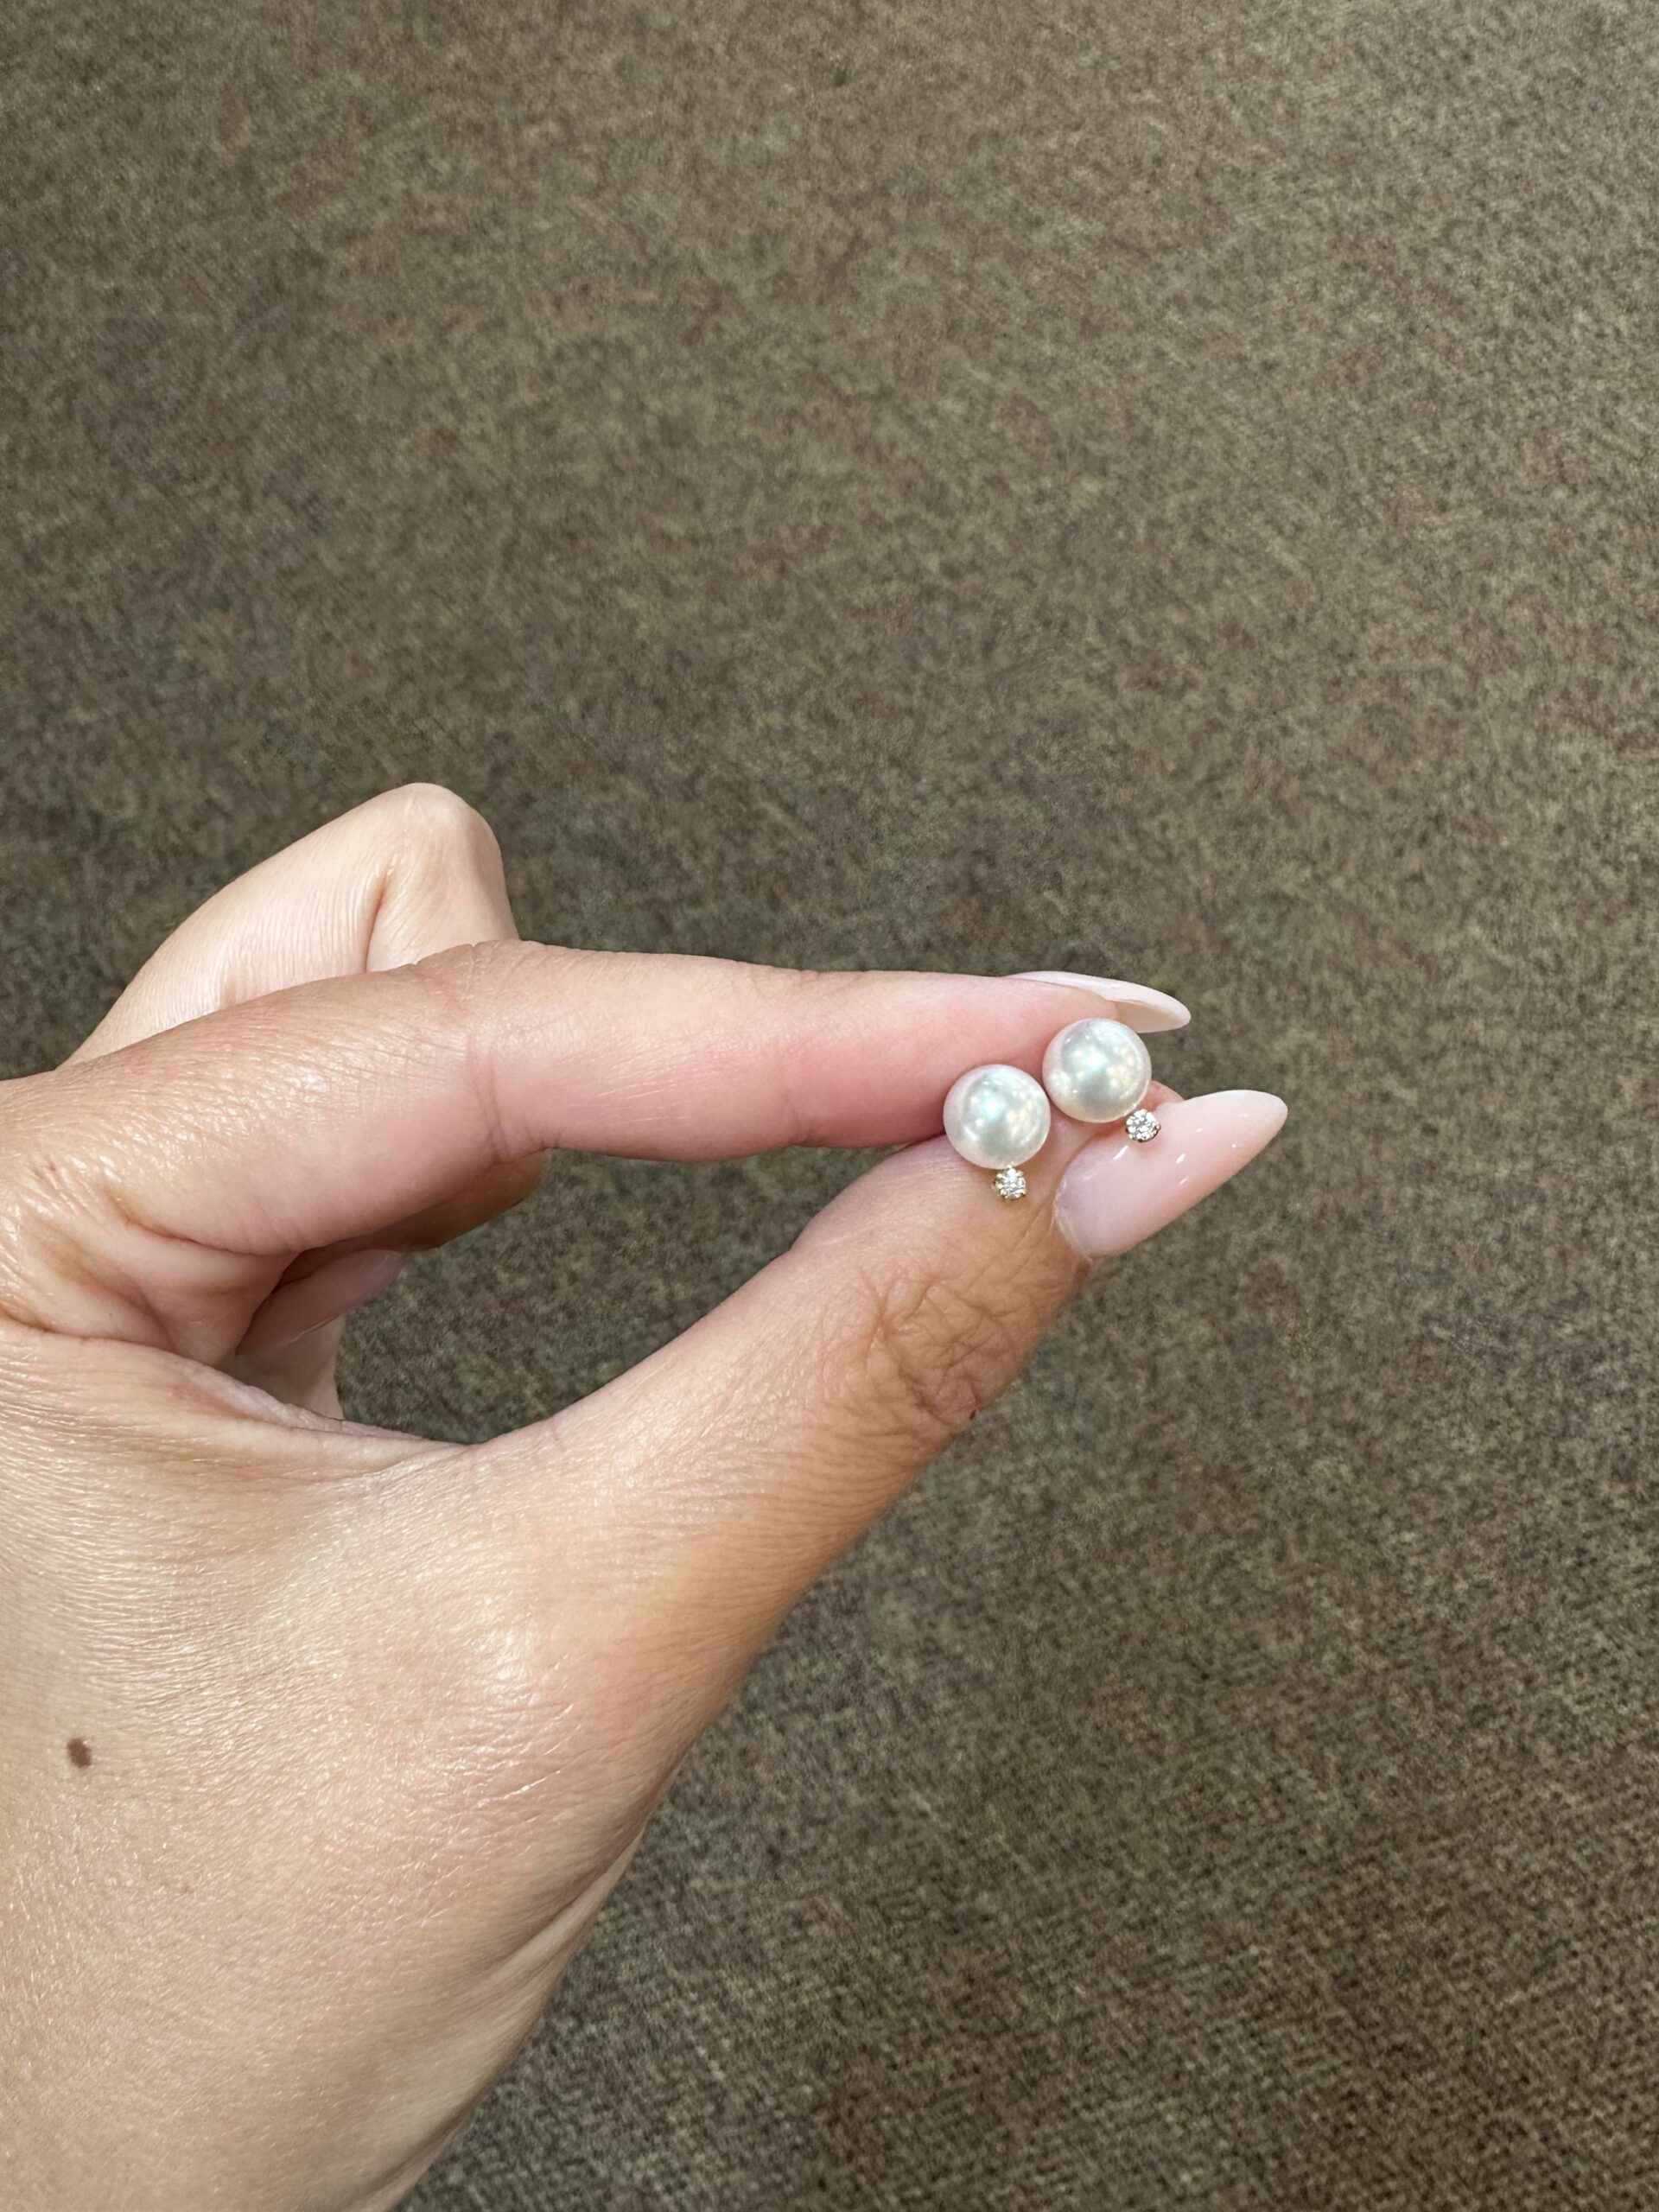 2pcs Heart Shaped Artificial Pearl Stud Earrings For Teenage Girls, Pink  Fashionable Ear Jewelry | SHEIN USA